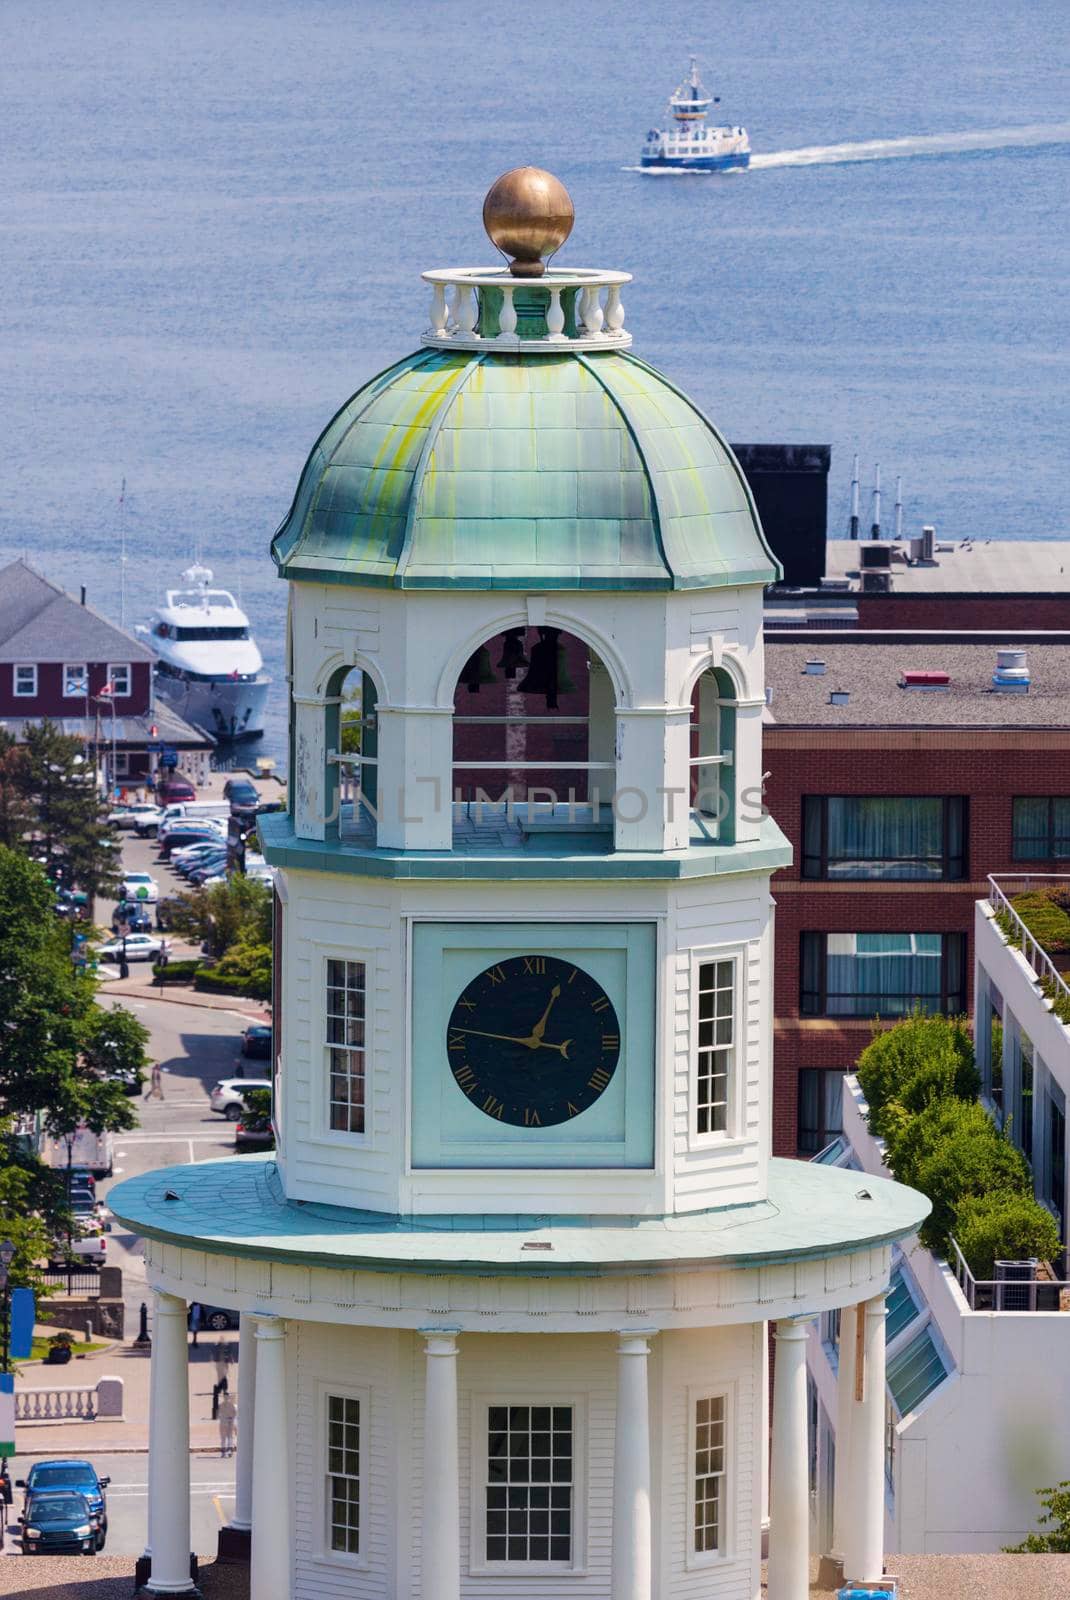 Halifax Town Clock, Nova Scotia. Halifax, Nova Scotia, Canada.